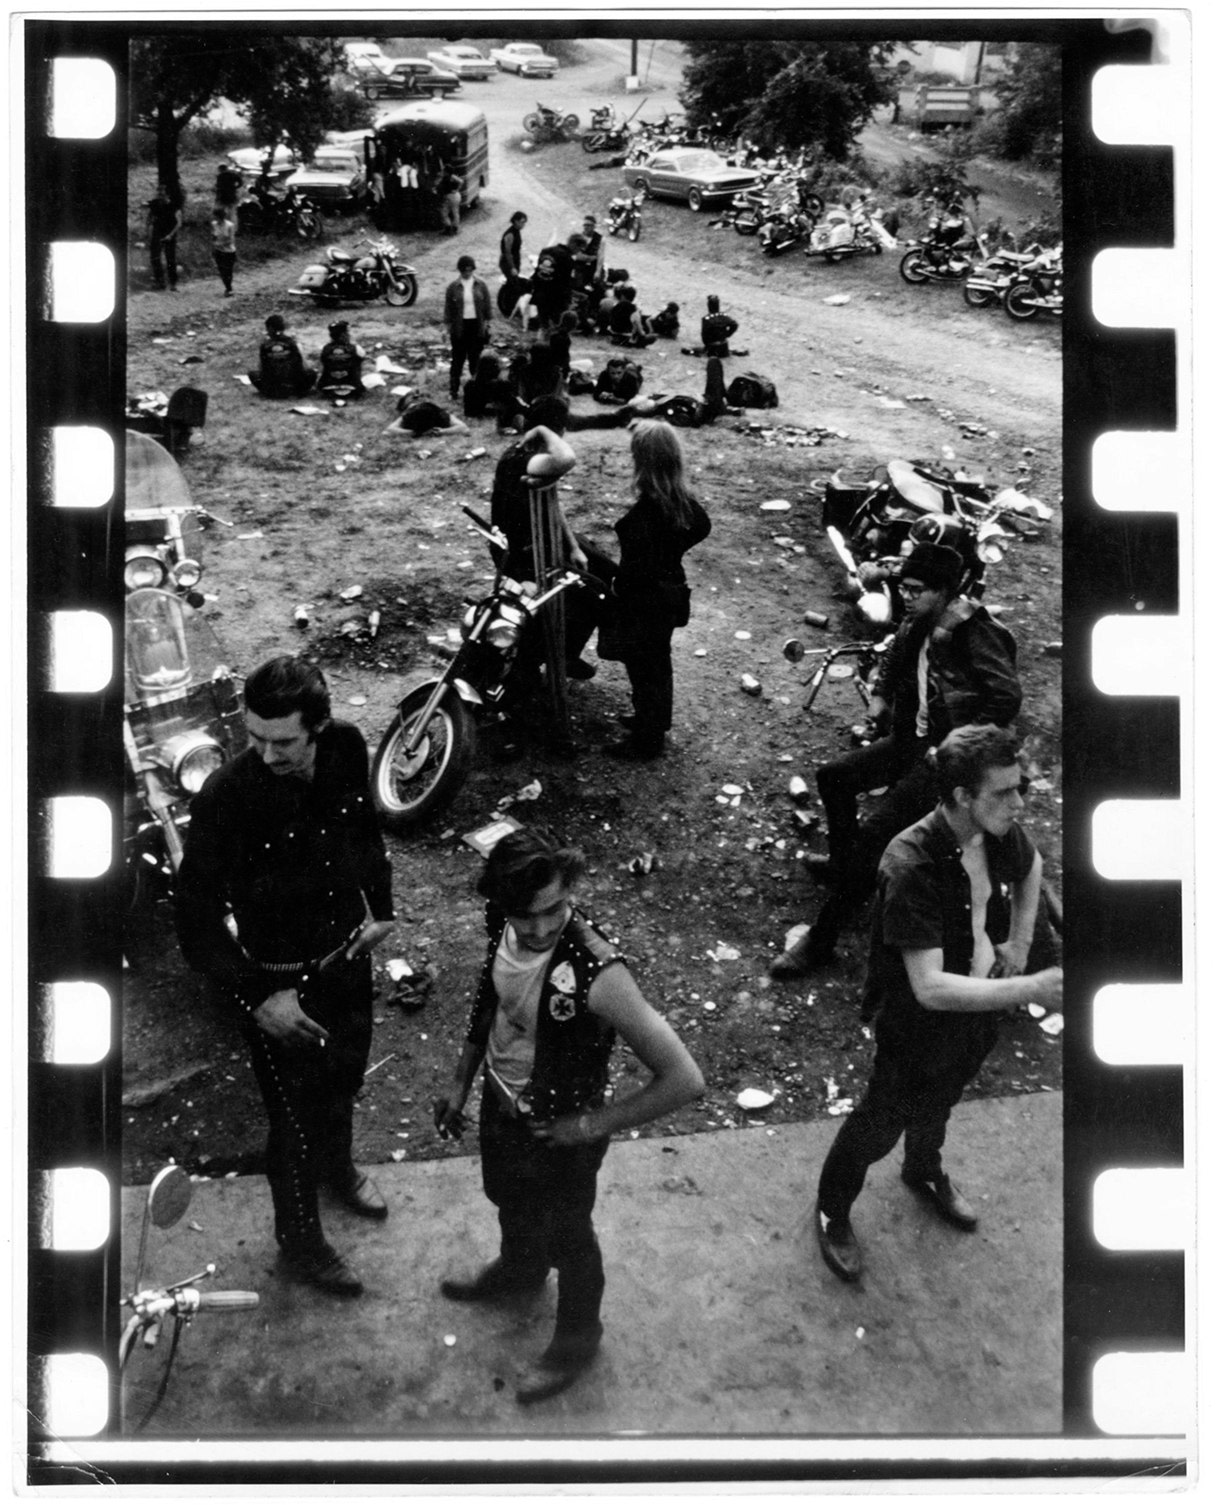 Copyright Danny Lyon / Magnum Photos, Dayton, Ohio, from The Bikeriders, 1966